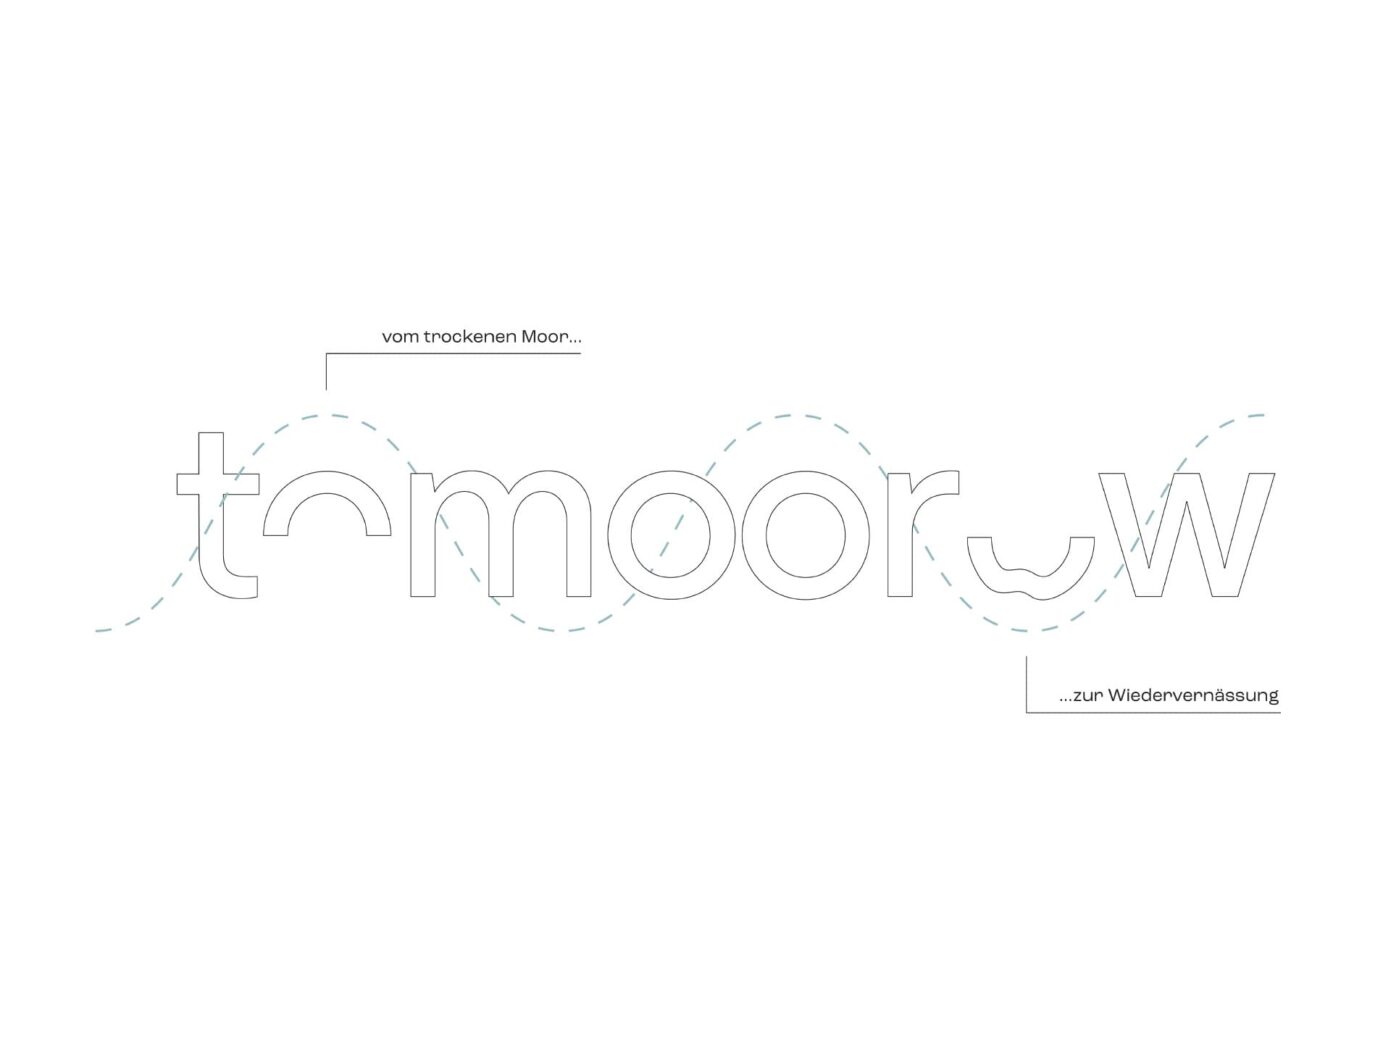 Sherpa Design - Corporate Design - Case toMOORow 3